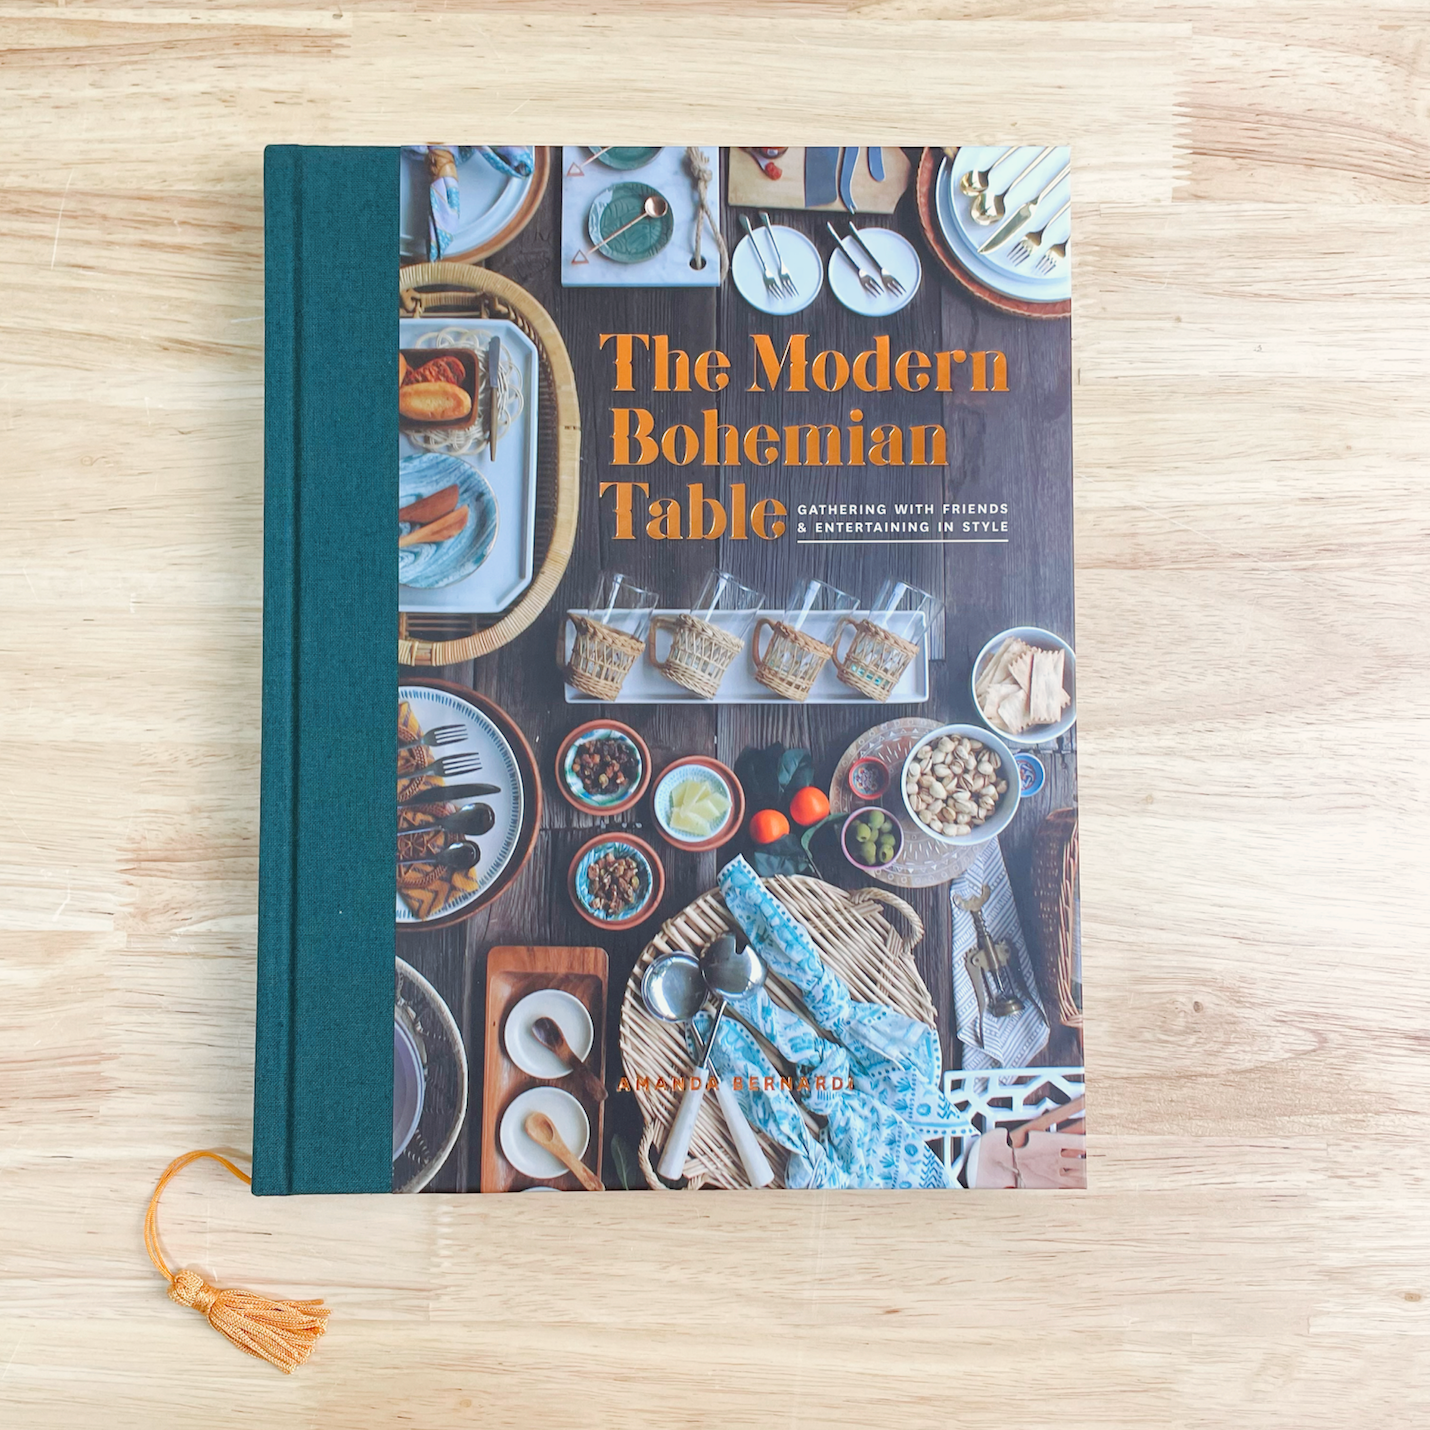 THE MODERN BOHEMIAN TABLE